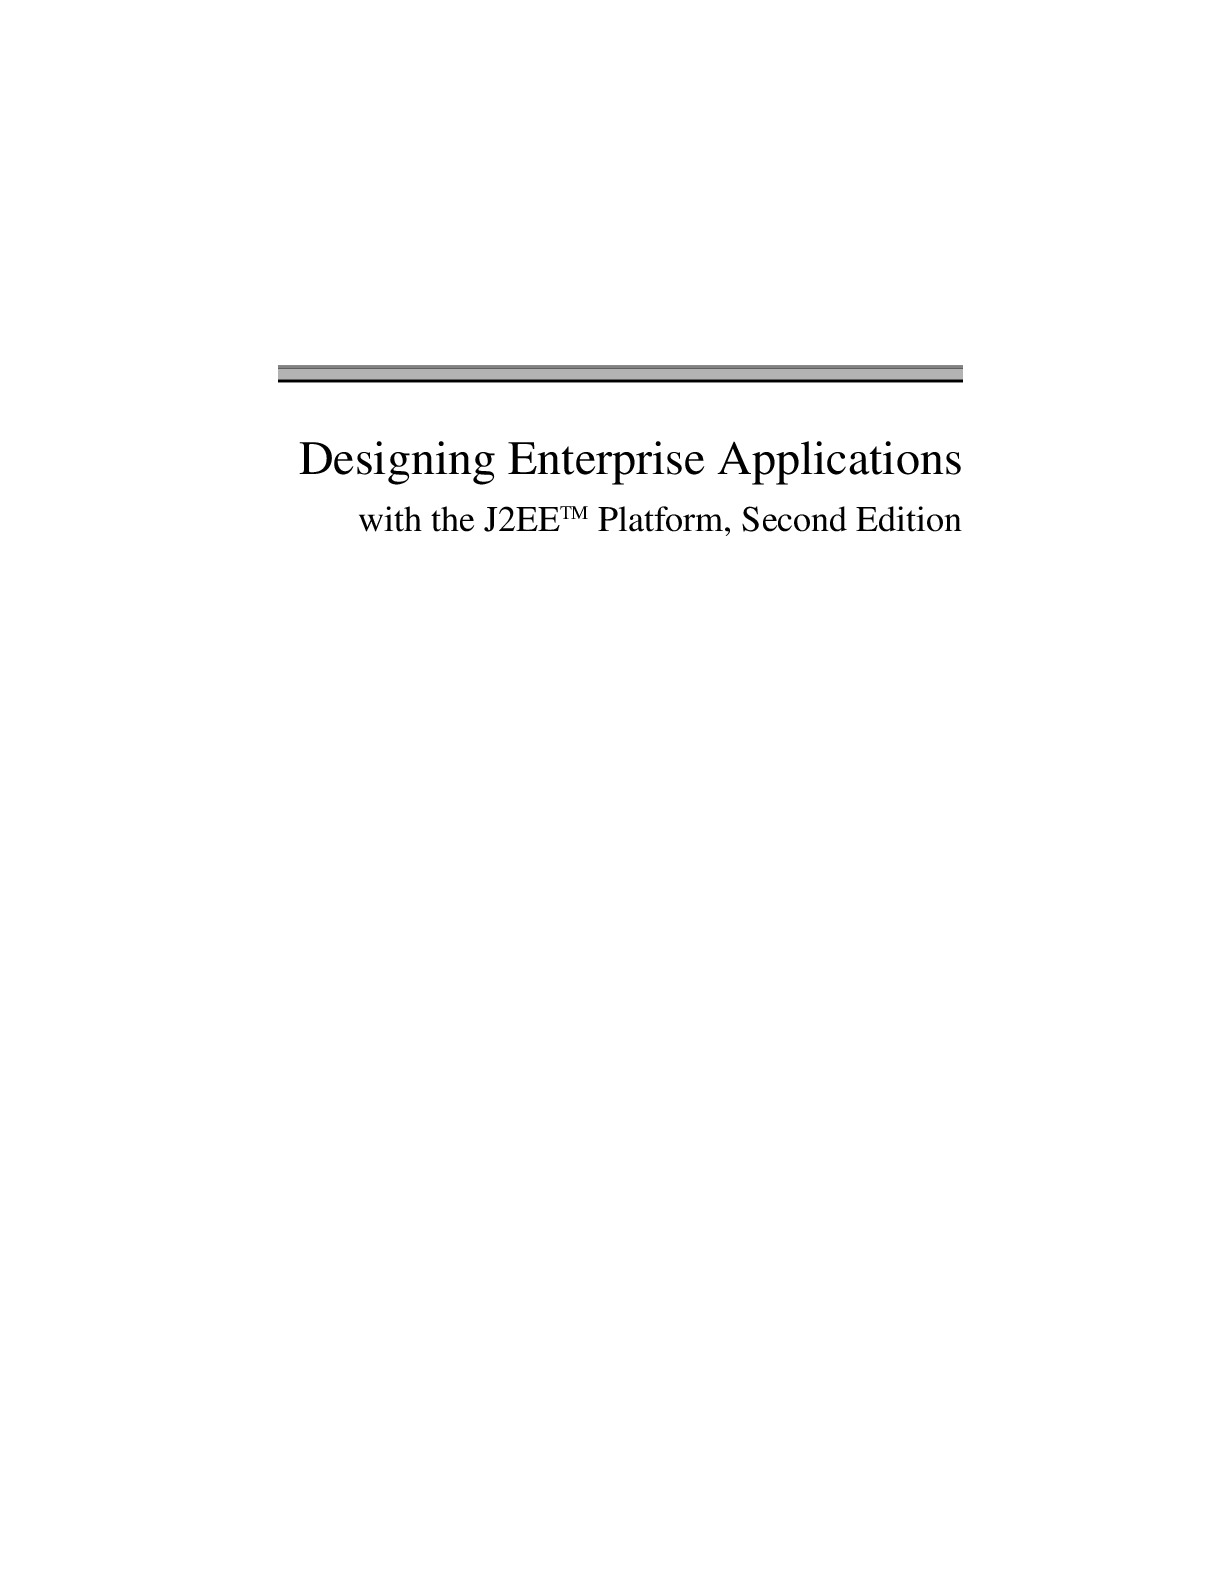 [JAVA][Designing Enterprise Application]